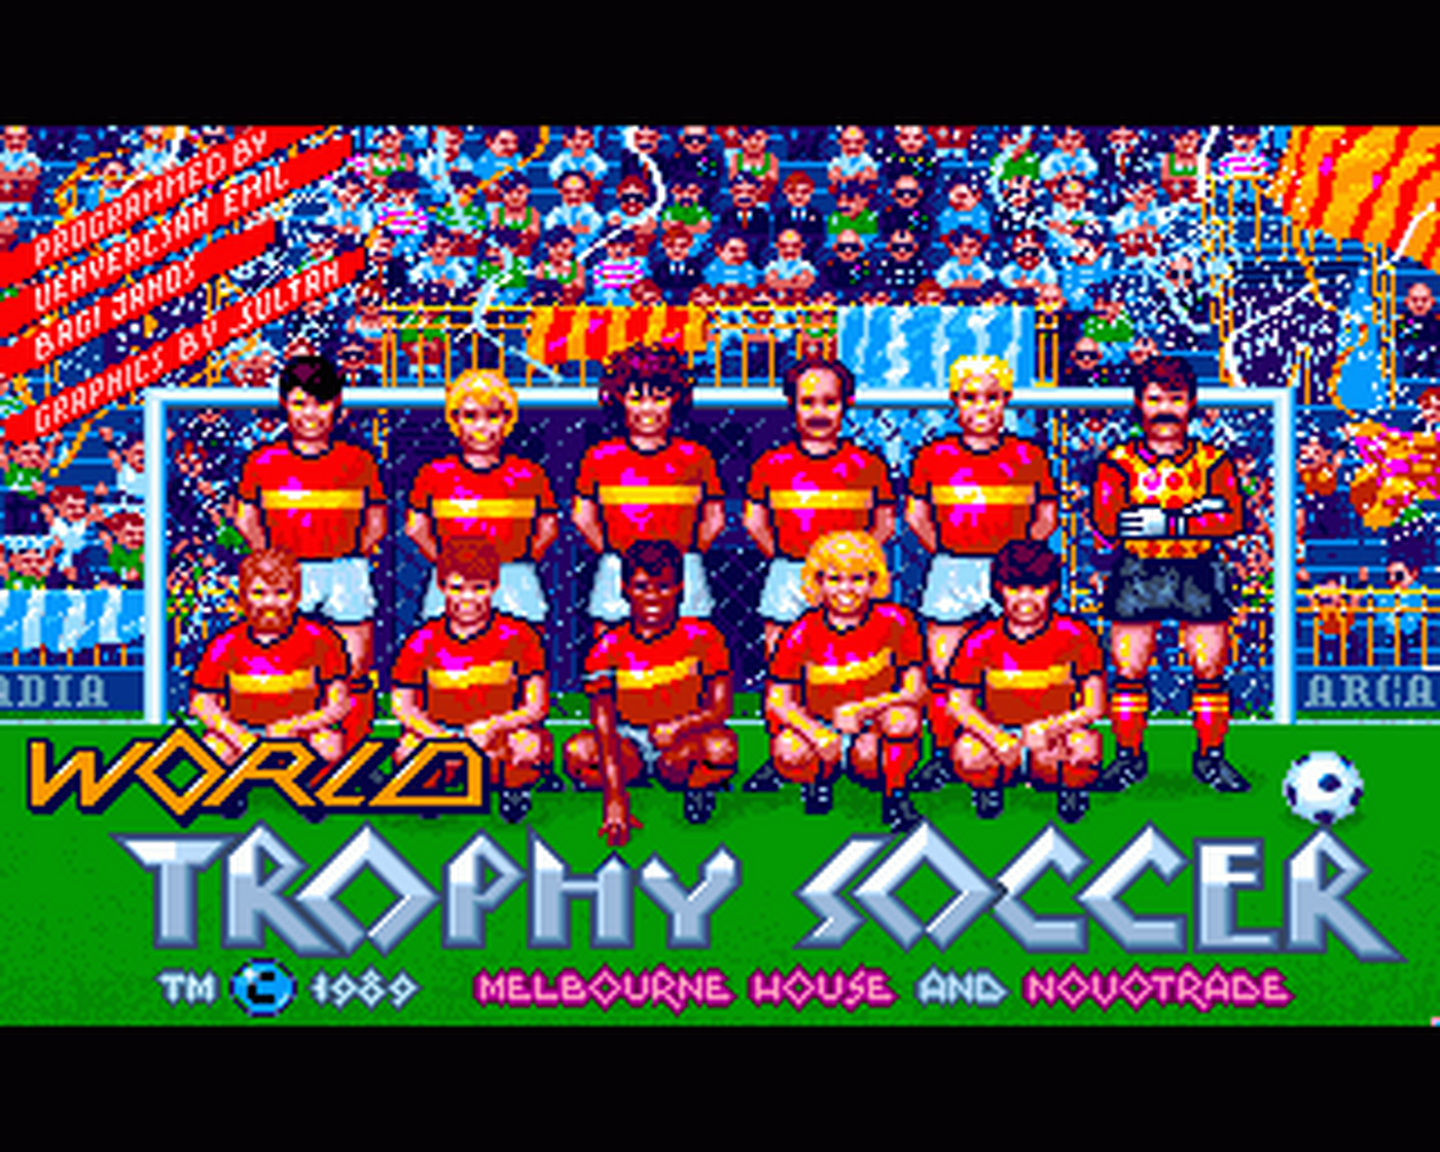 Amiga GameBase Rick_Davis's_World_Trophy_Soccer Melbourne_House 1989